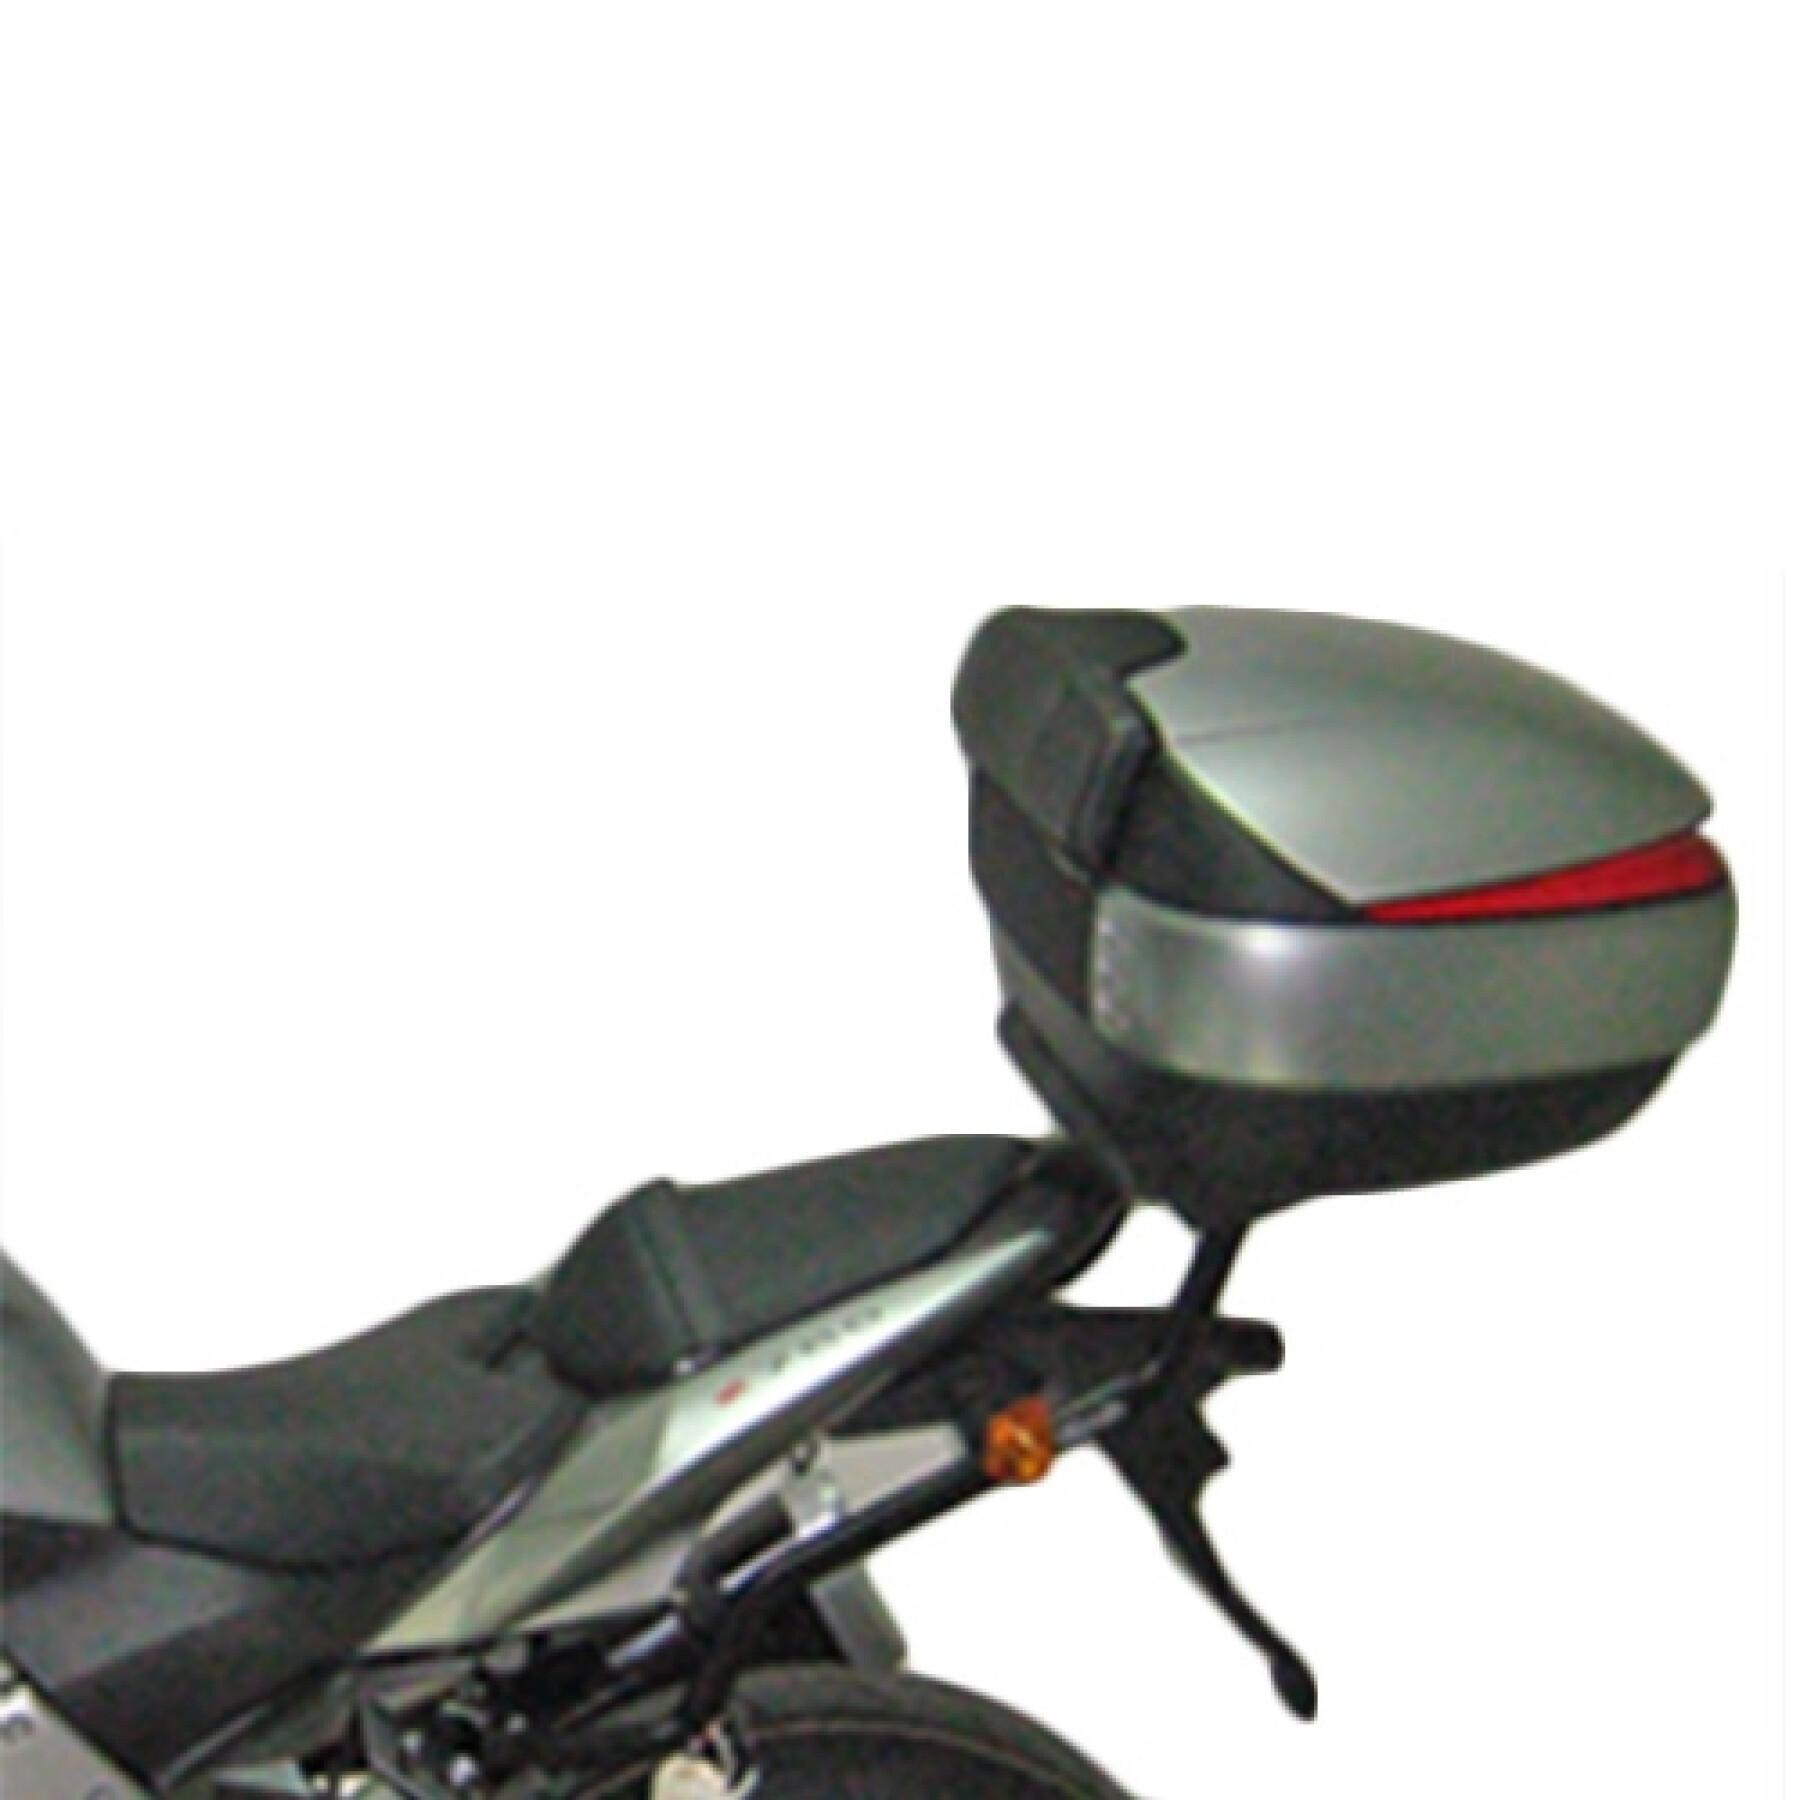 Halter Top Case Motorrad Shad Kawasaki Z 1000 (07 bis 09)